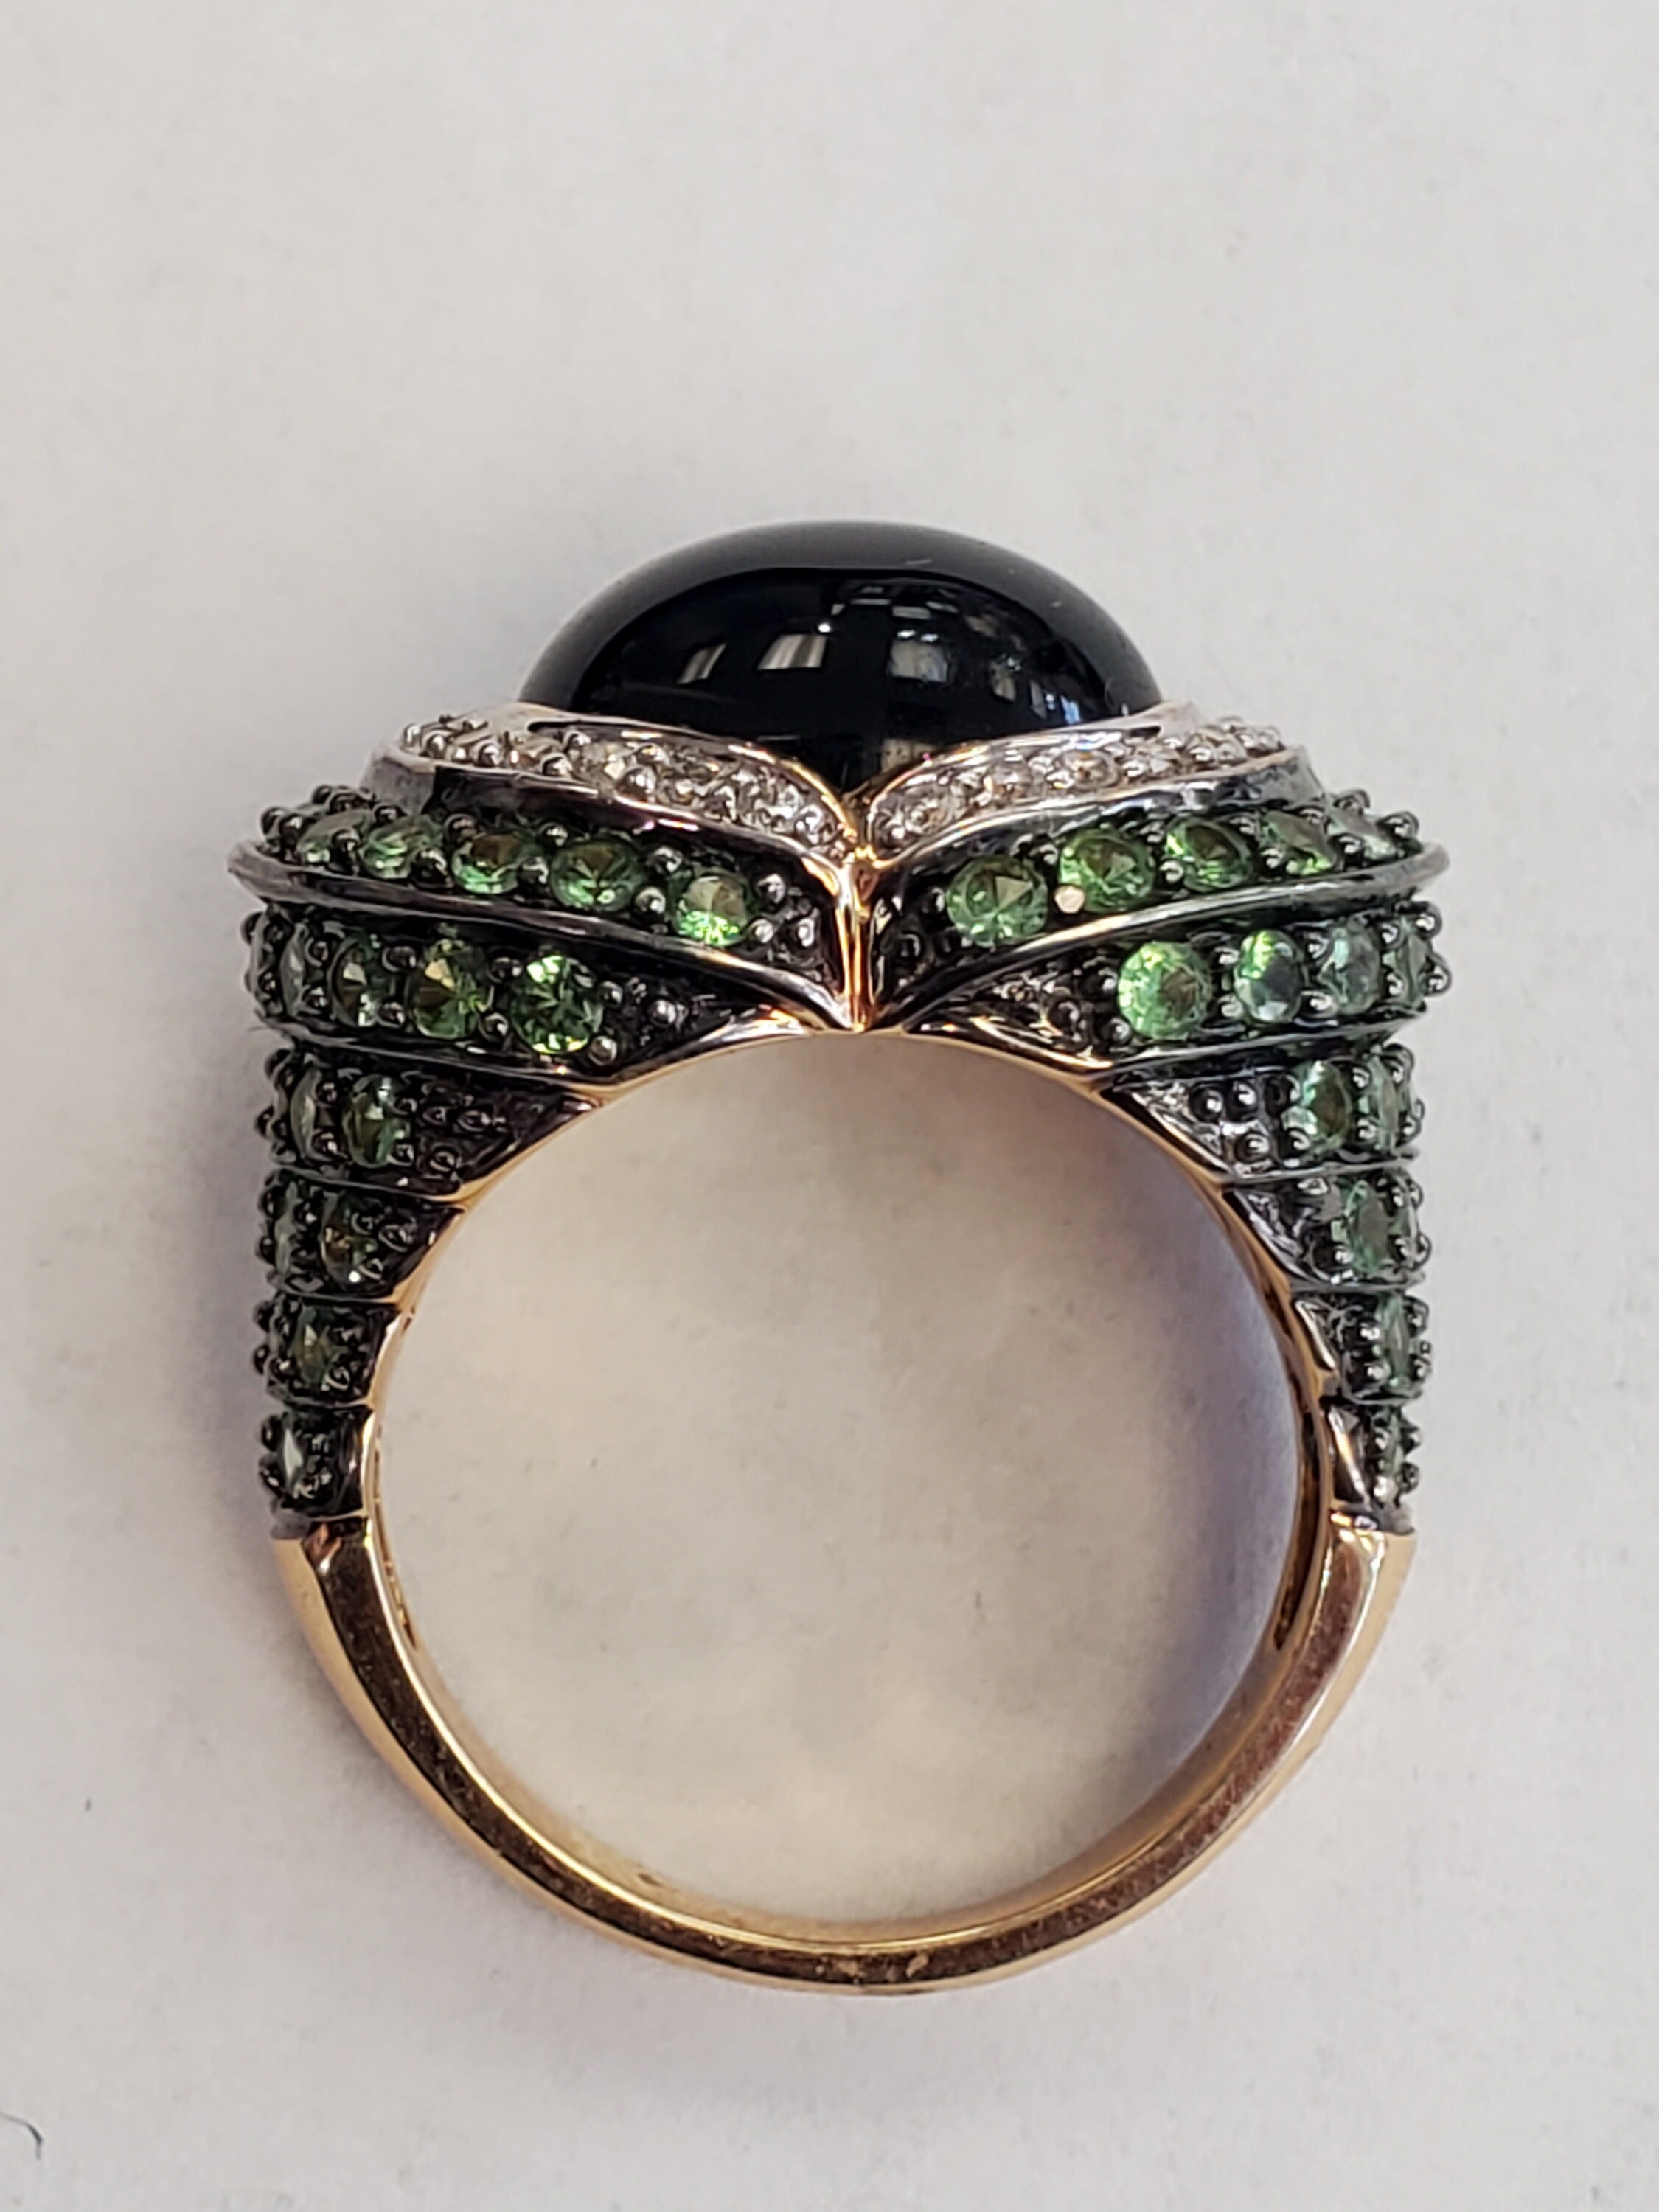 Product Image for Carlo Viani 14k Yellow Gold Onyx Tsavorite Garnet Diamond Ring Size 6